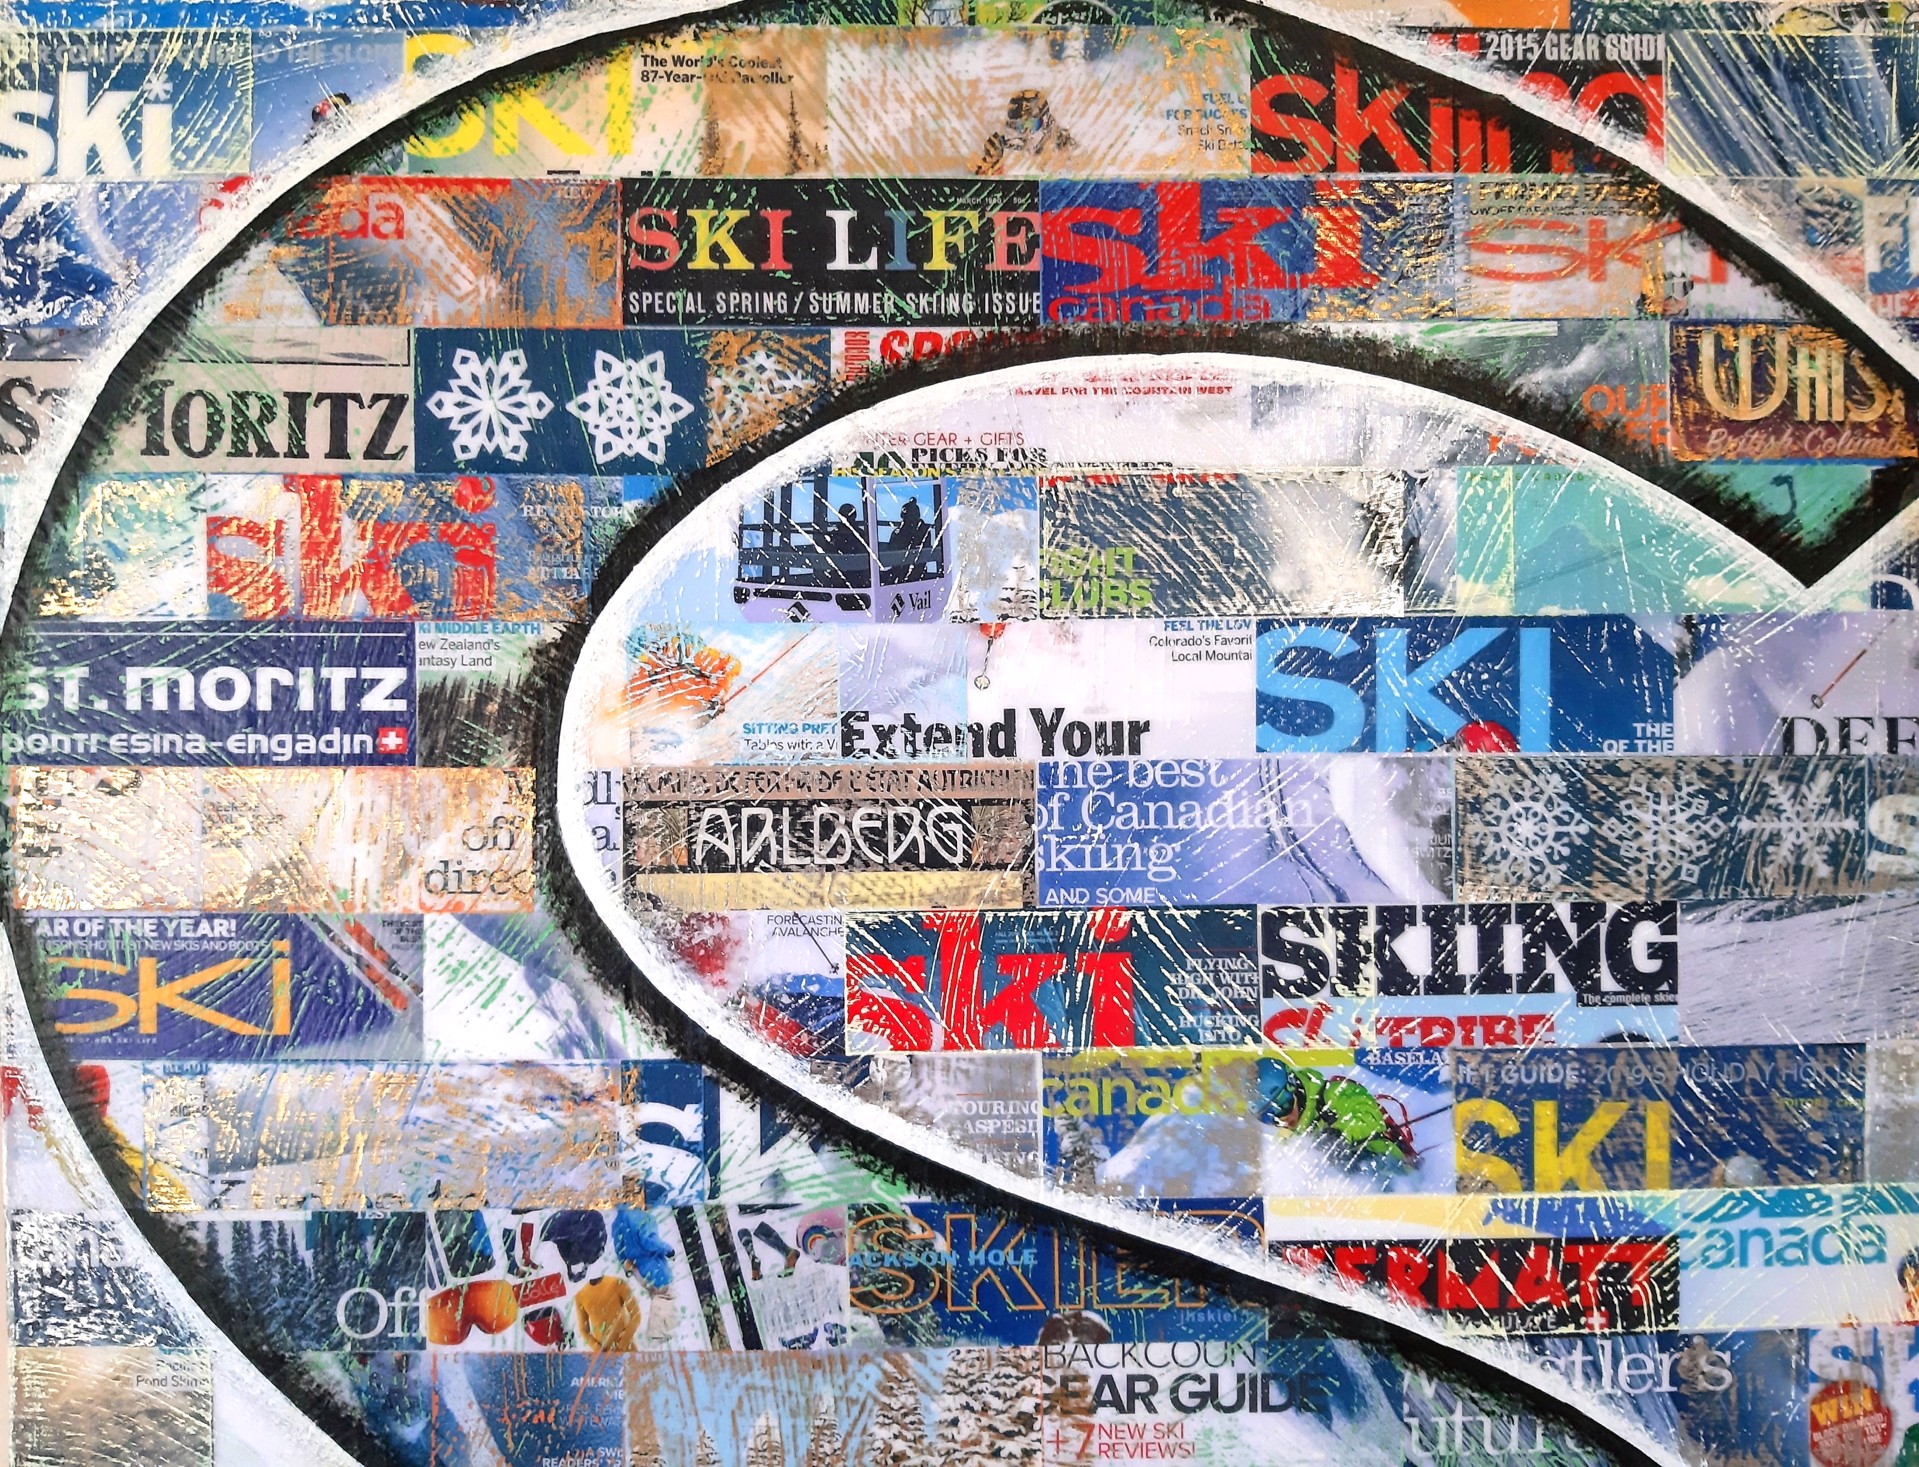 The Magic of Ski I by Steli Christoff